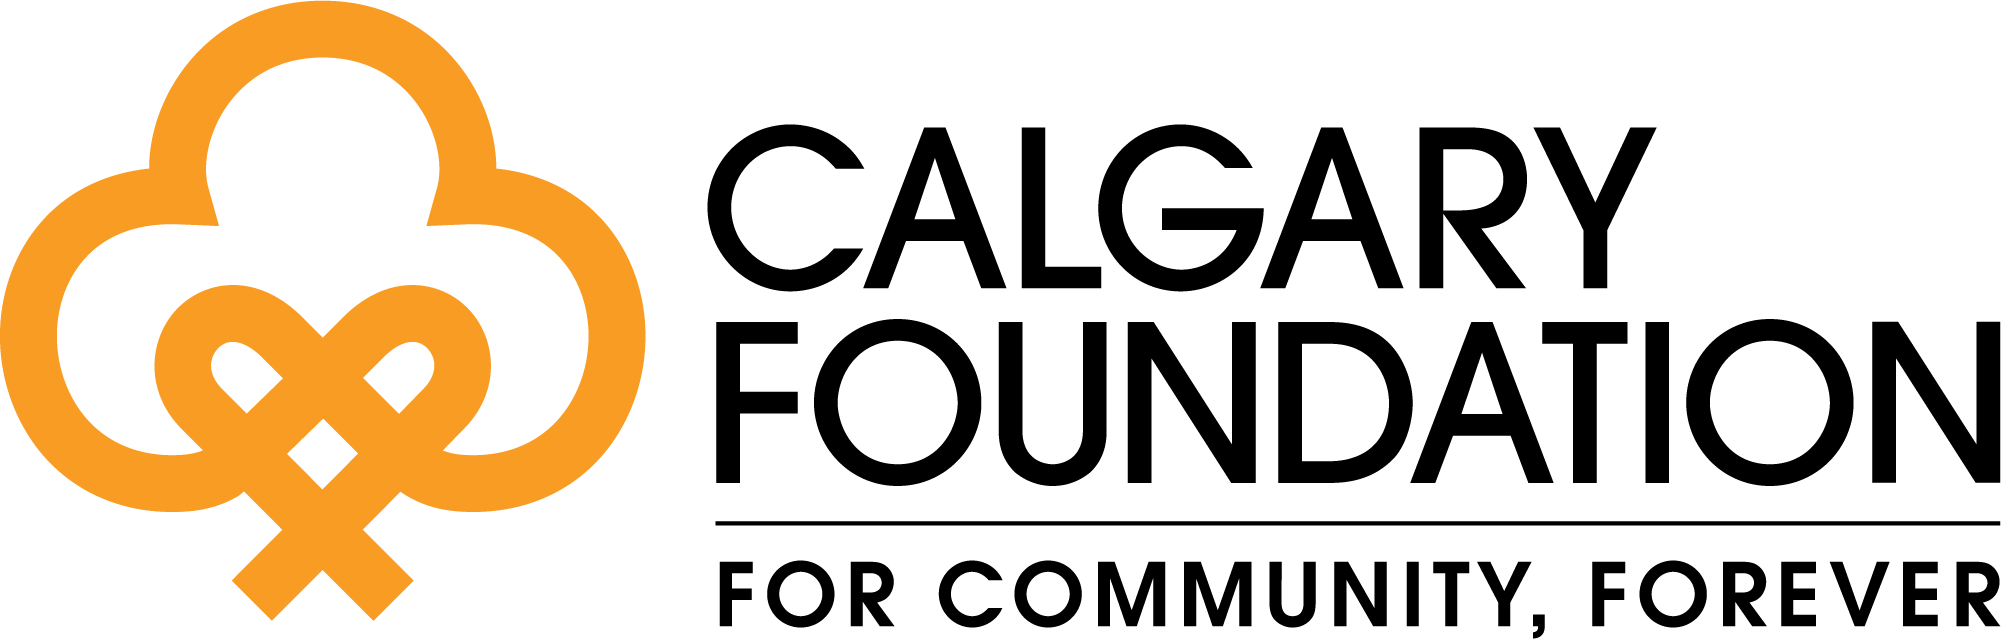 Calgary Foundation Logo